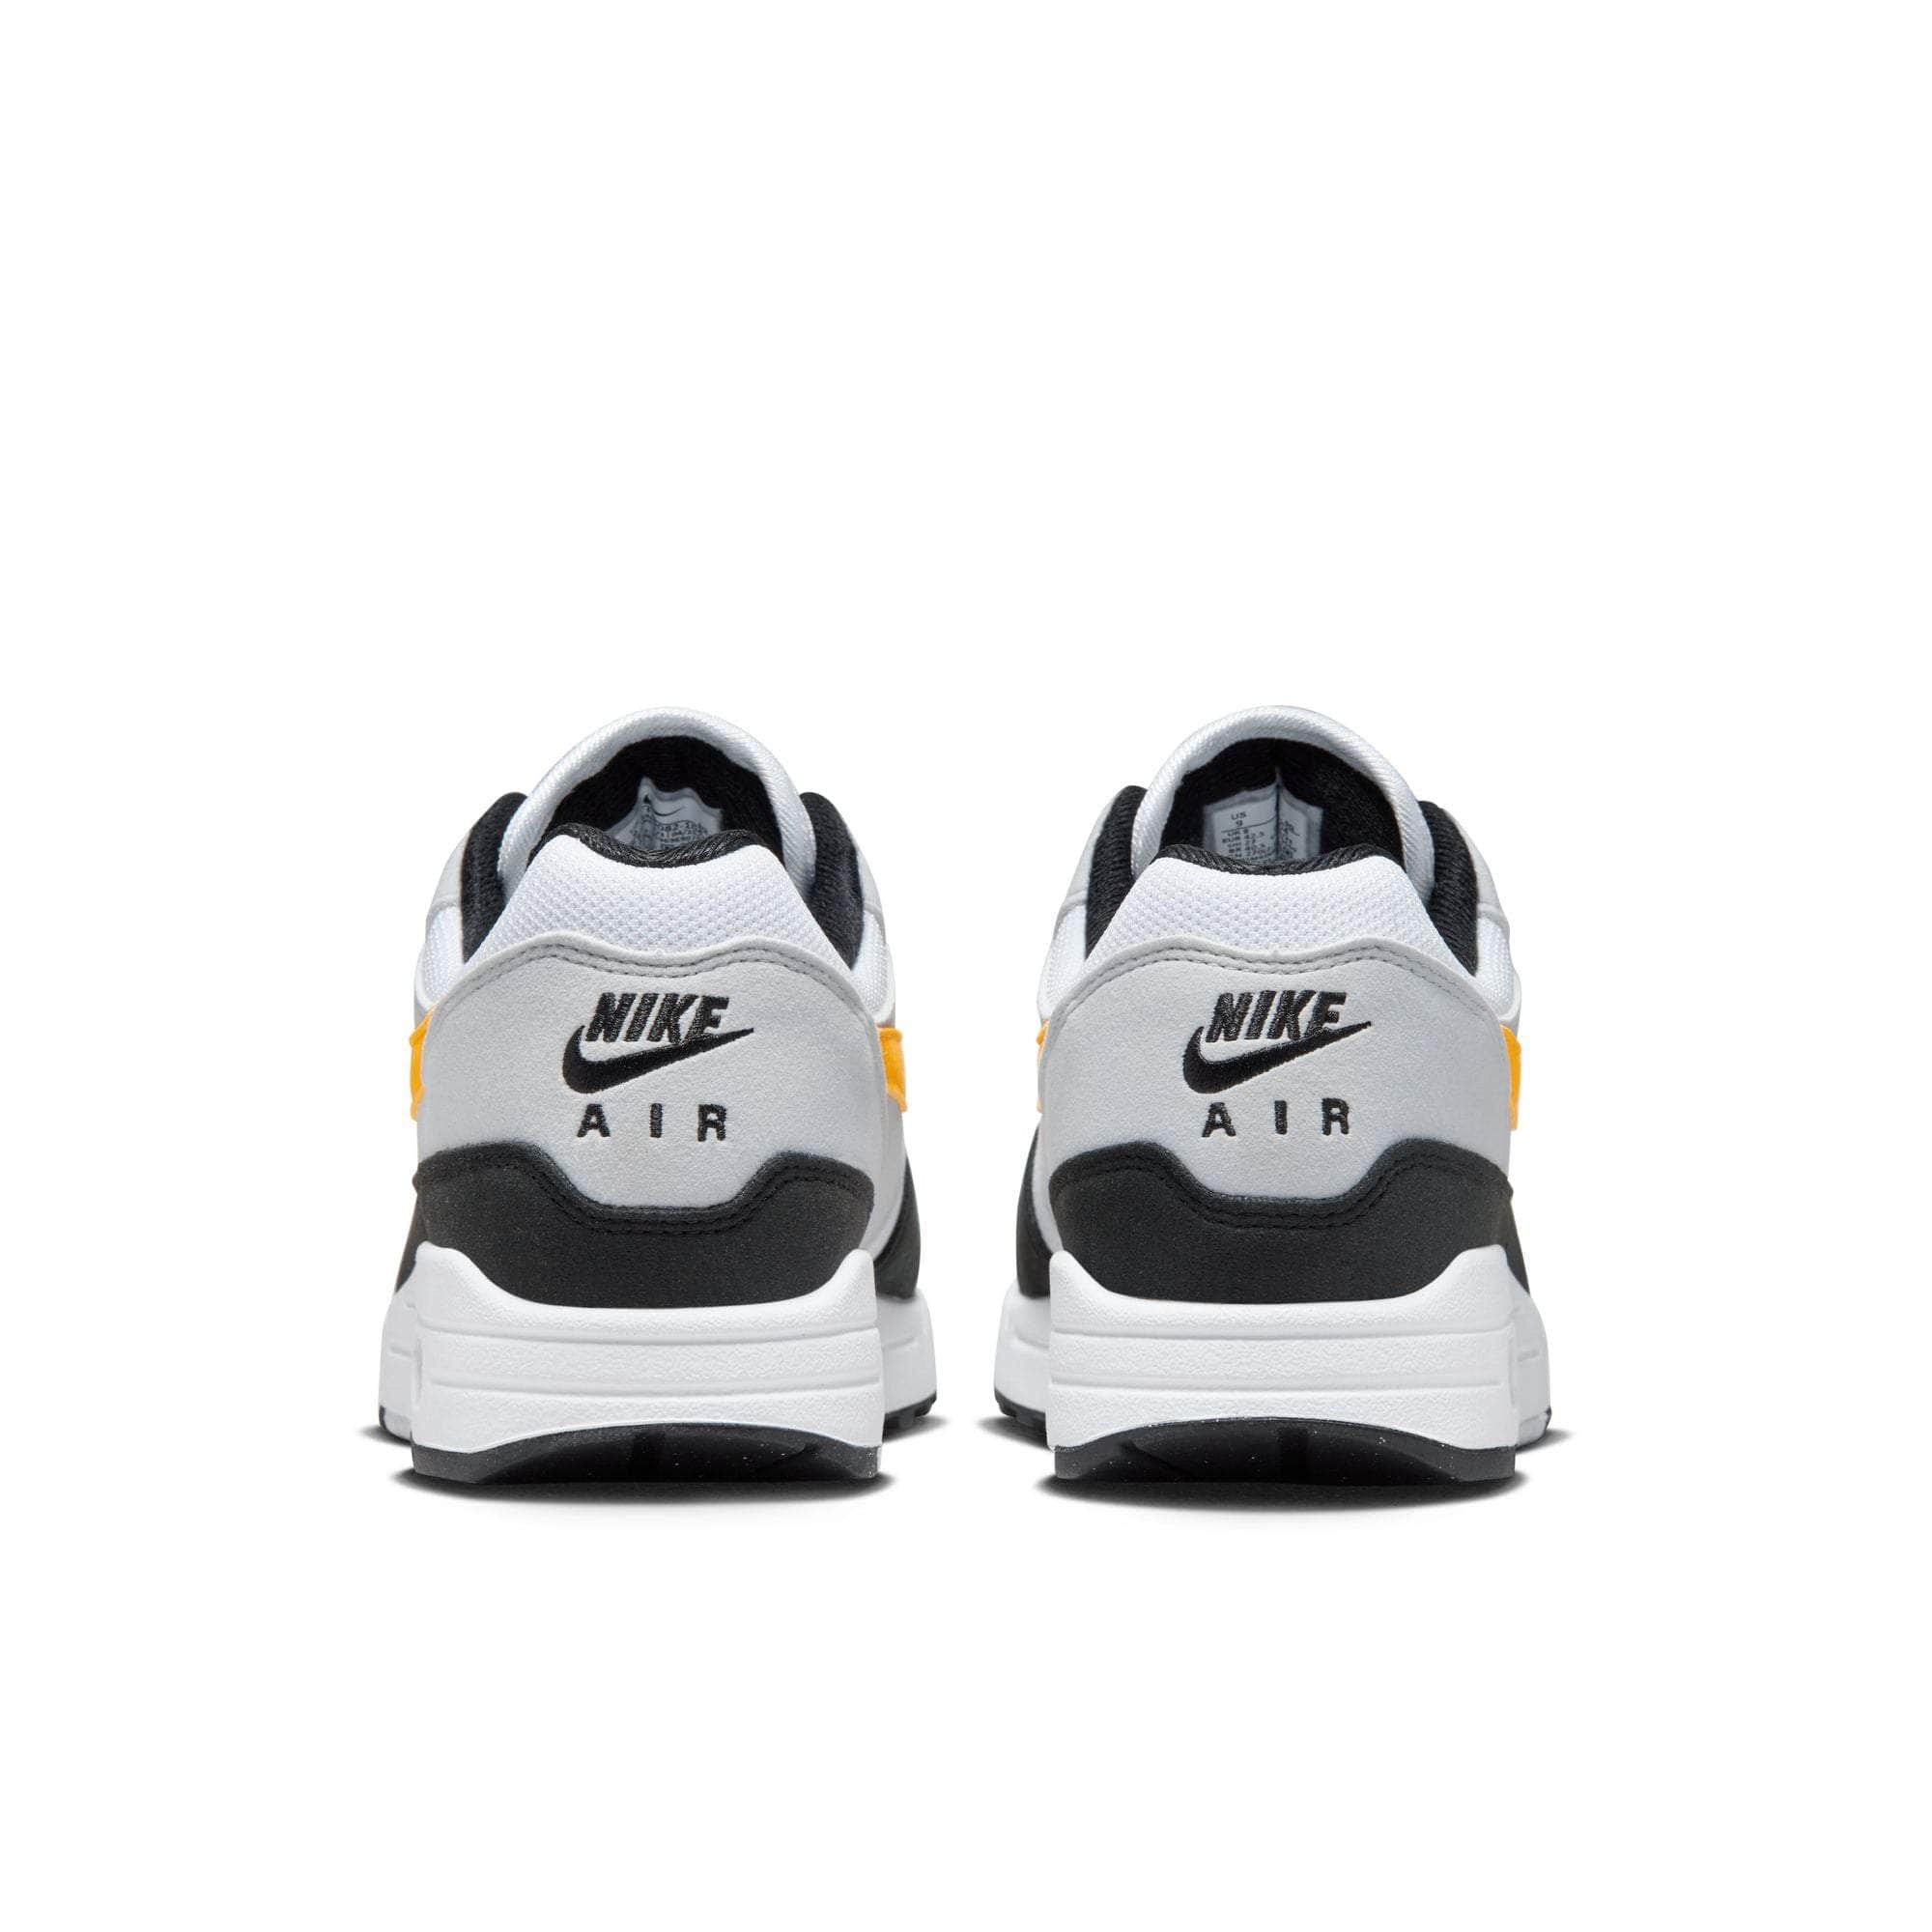 Nike FOOTWEAR Nike Air Max 1 "White University Gold" - Men's